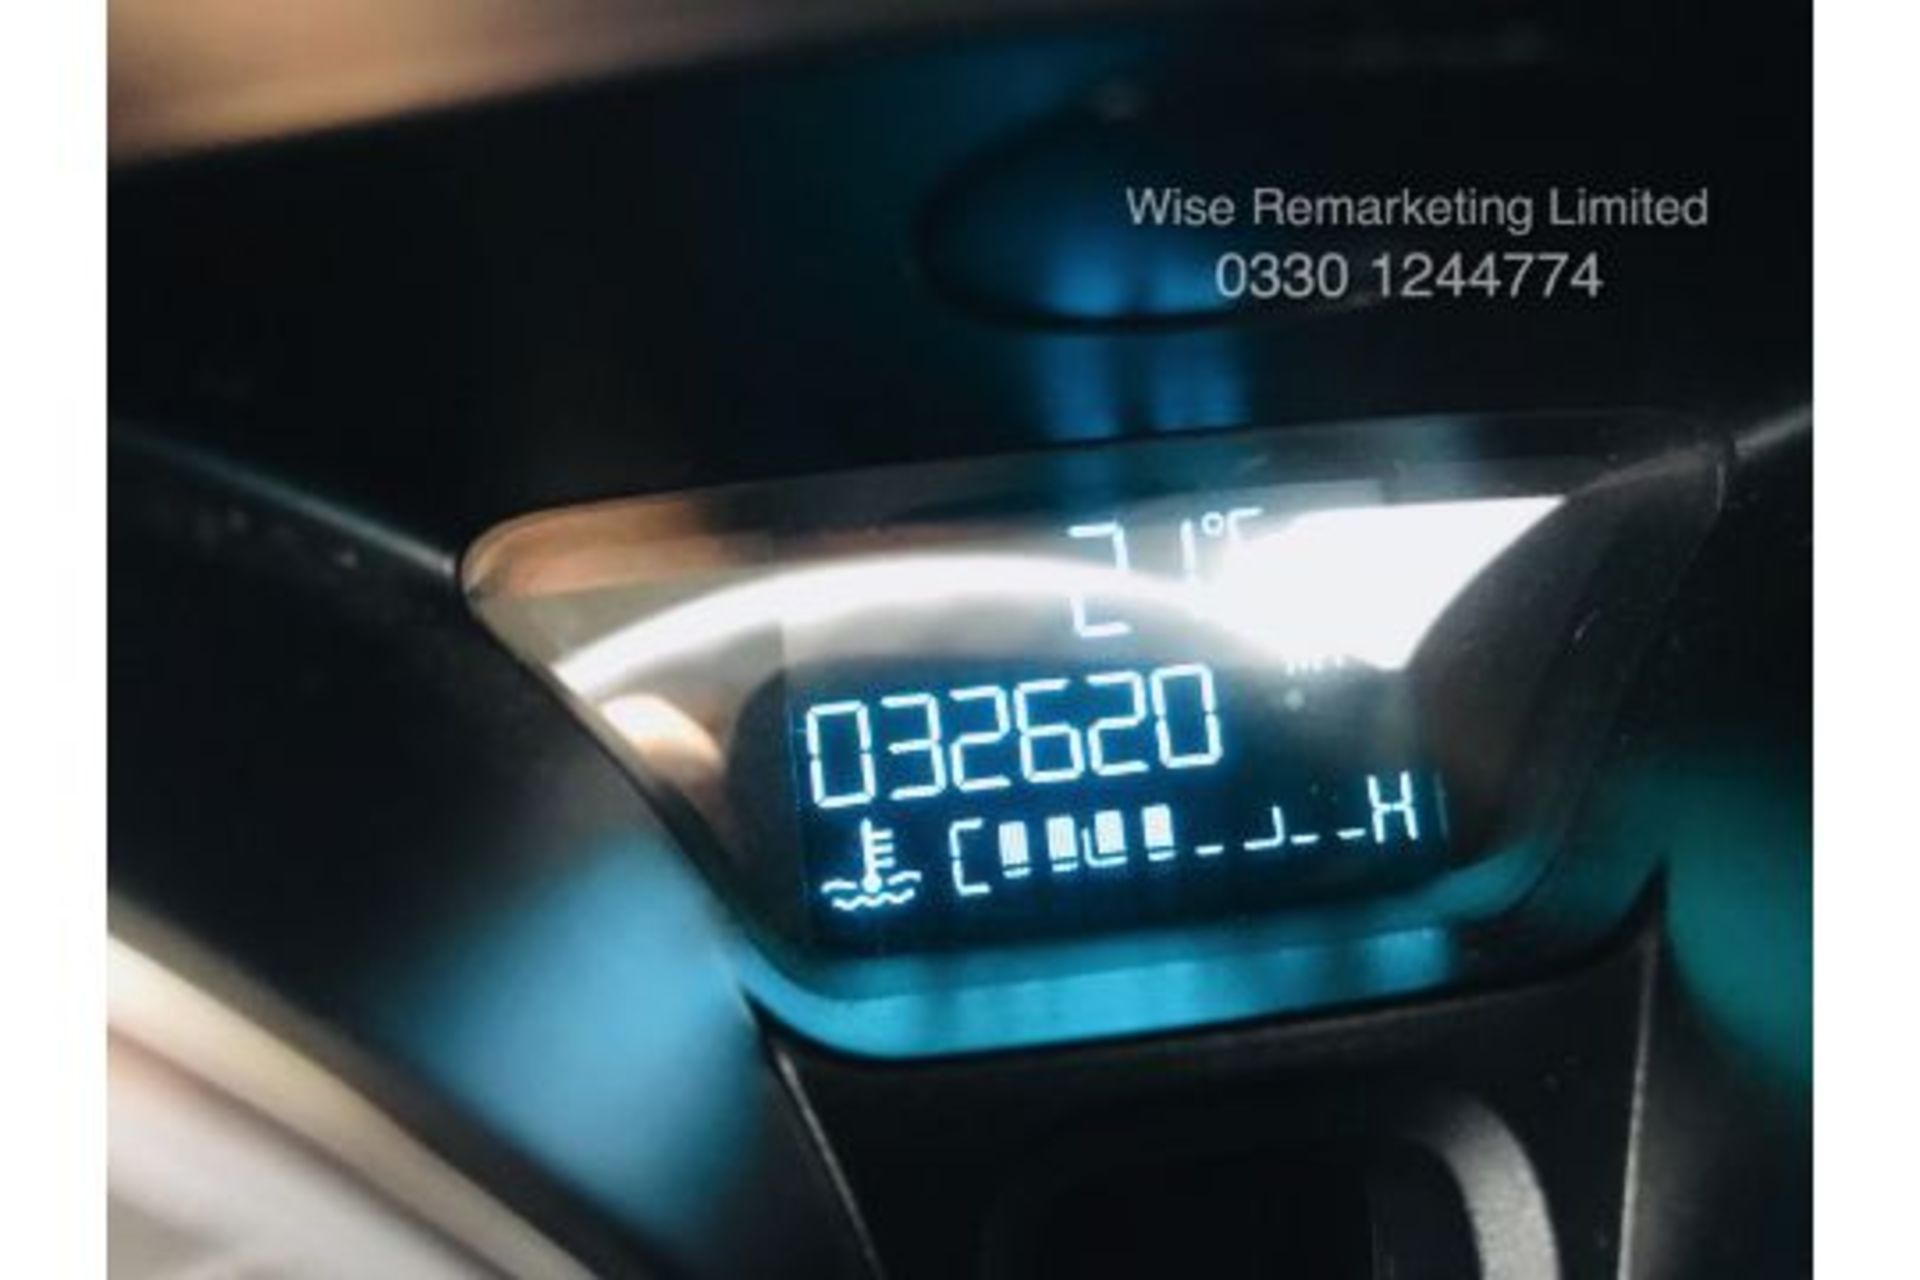 (RESERVE MET) Ford Fiesta 1.2 Zetec 3dr - 2016 Model - Tinted Windows - ONLY 32K Miles - Image 24 of 24